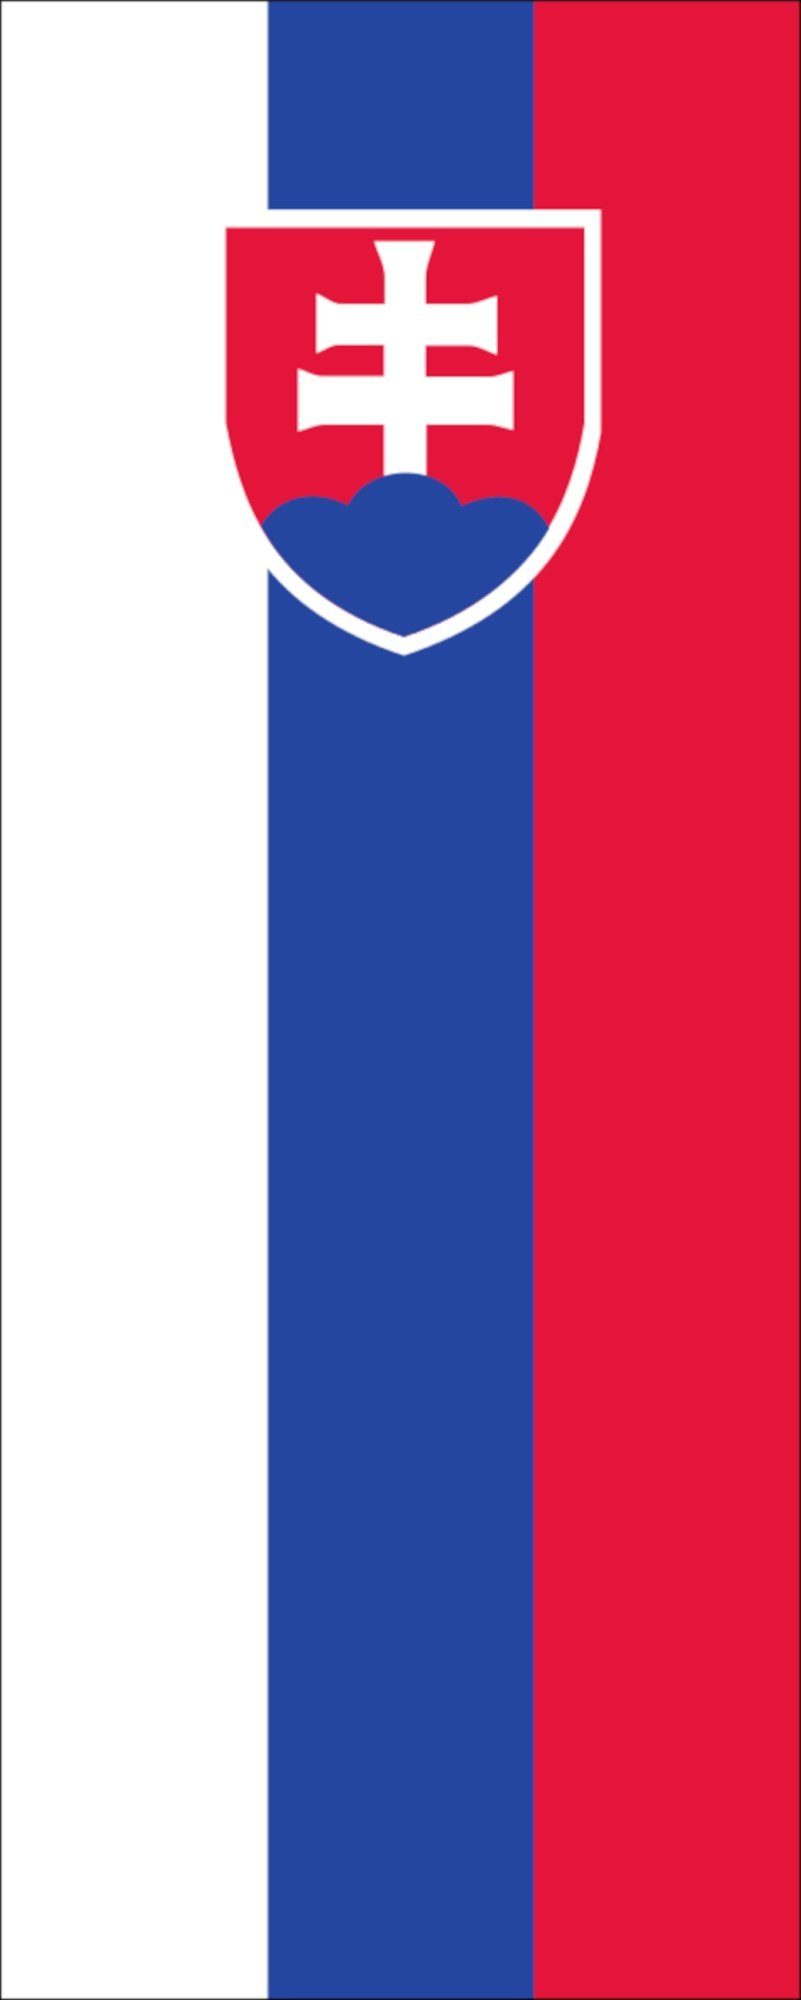 Hochformat Slowakei Flagge flaggenmeer g/m² Flagge 110